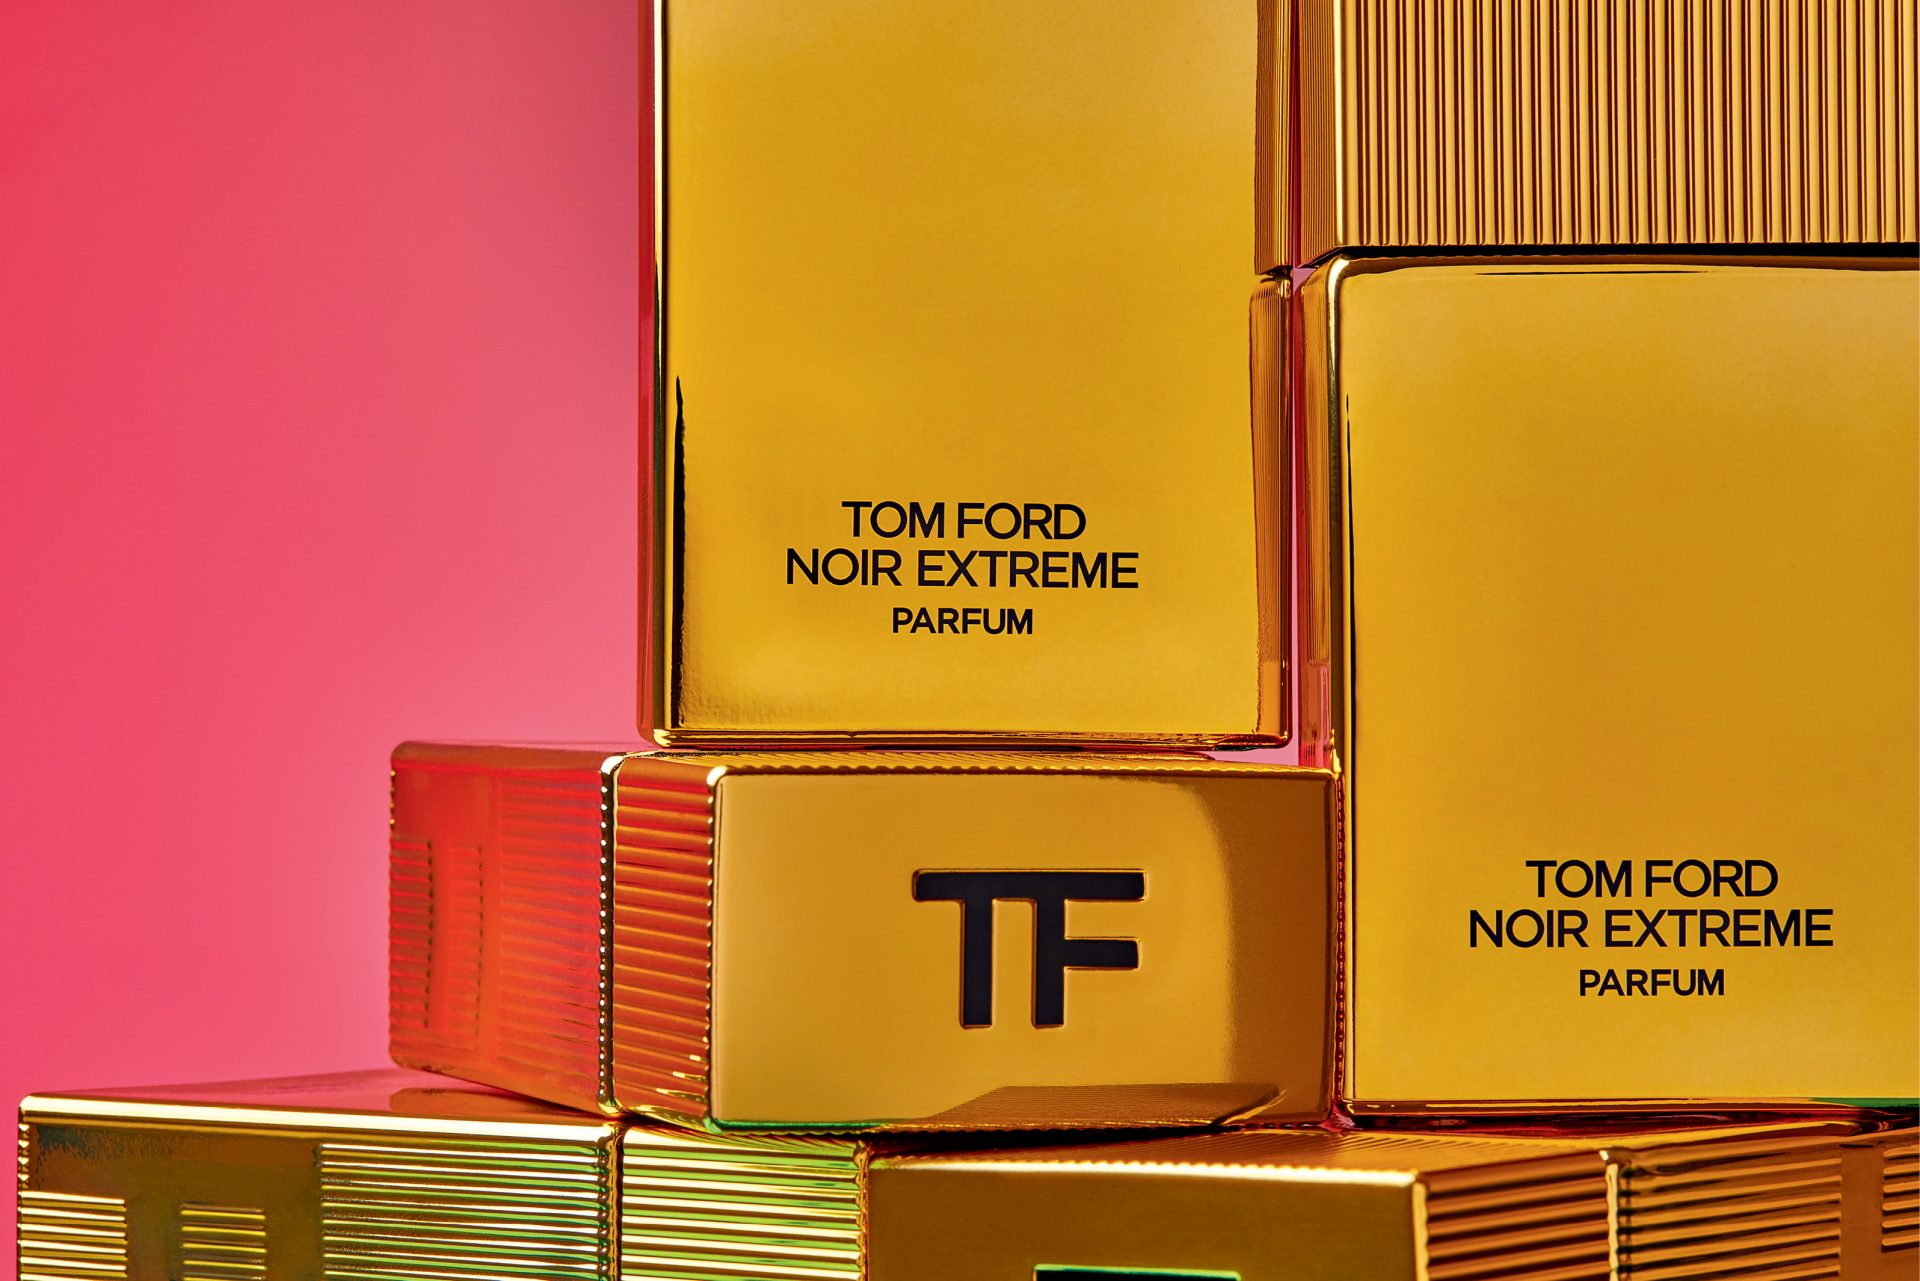 tom ford noir extreme perfume